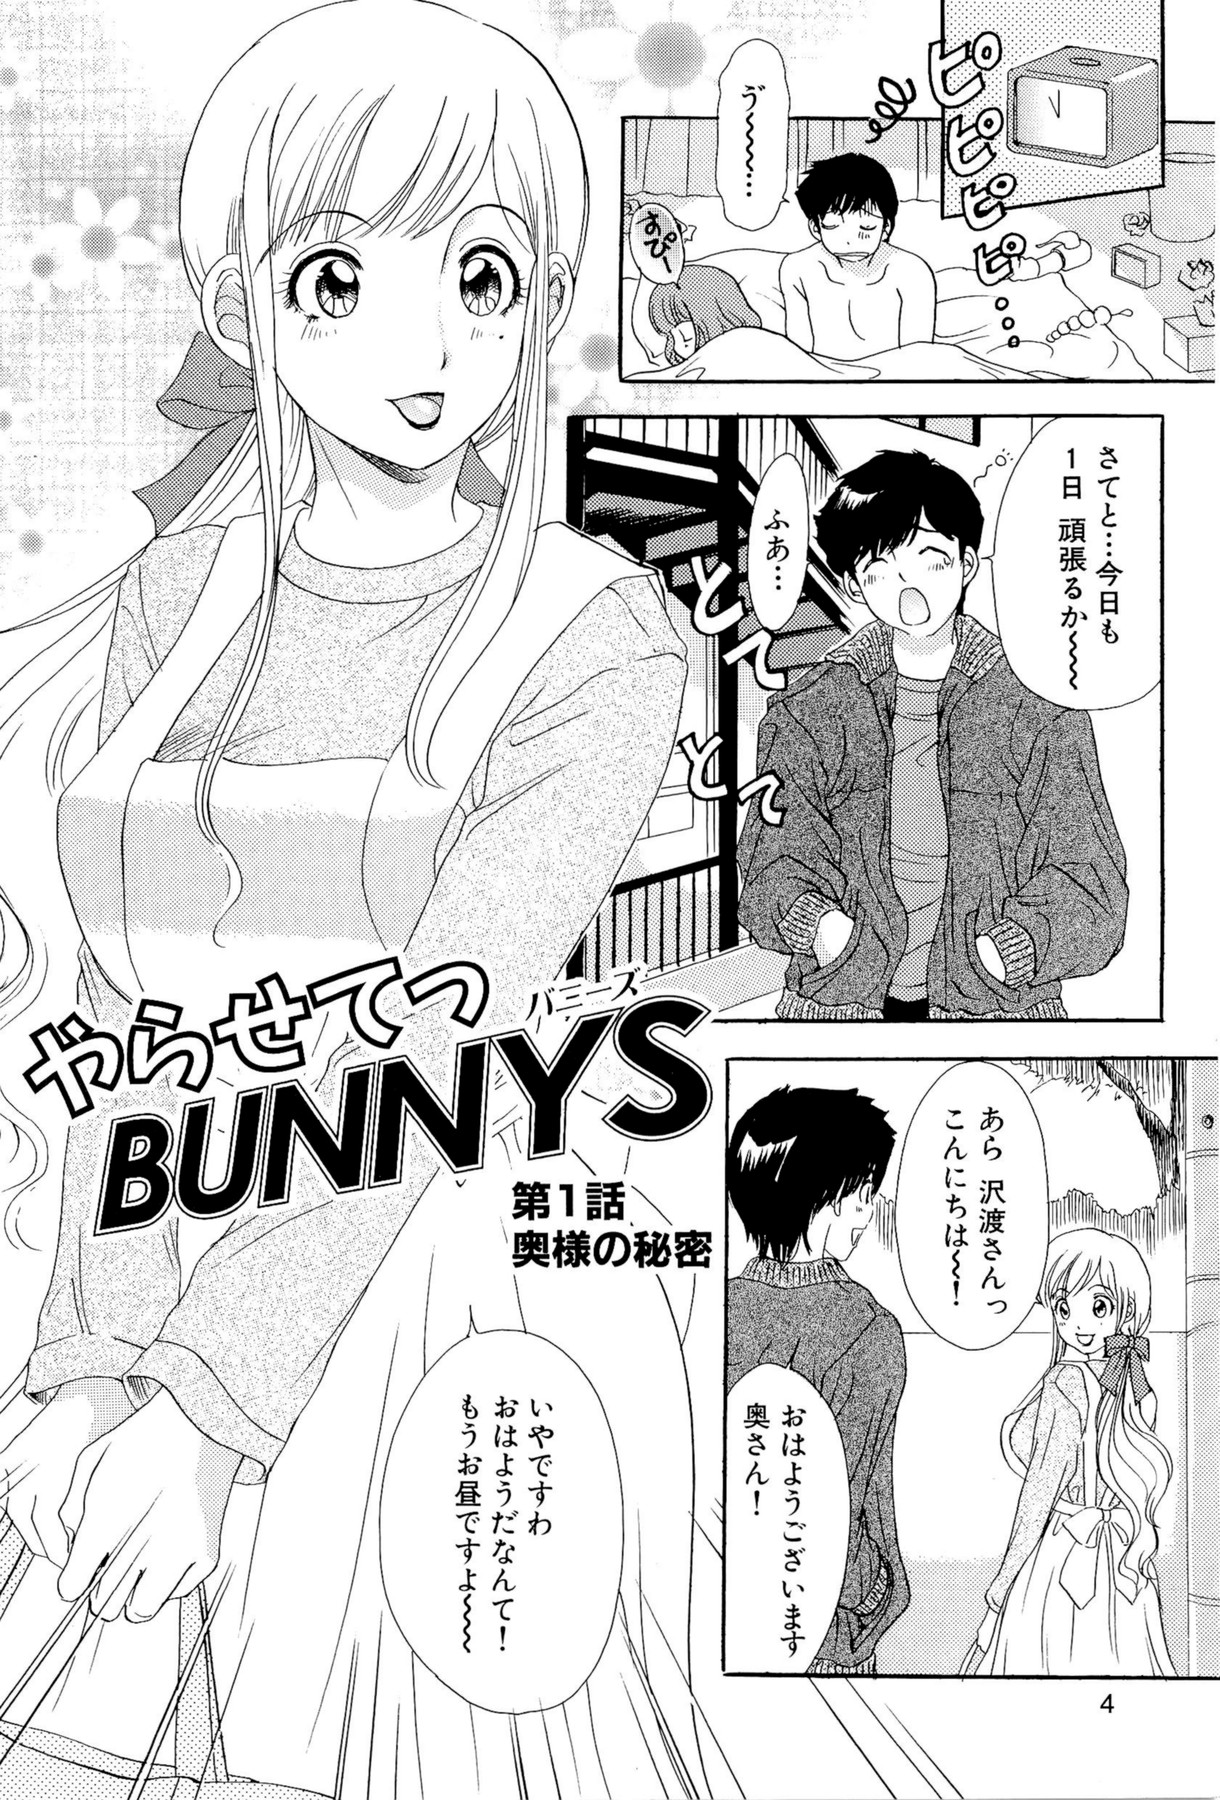 [The Amanoja9] やらせてっ Bunnys